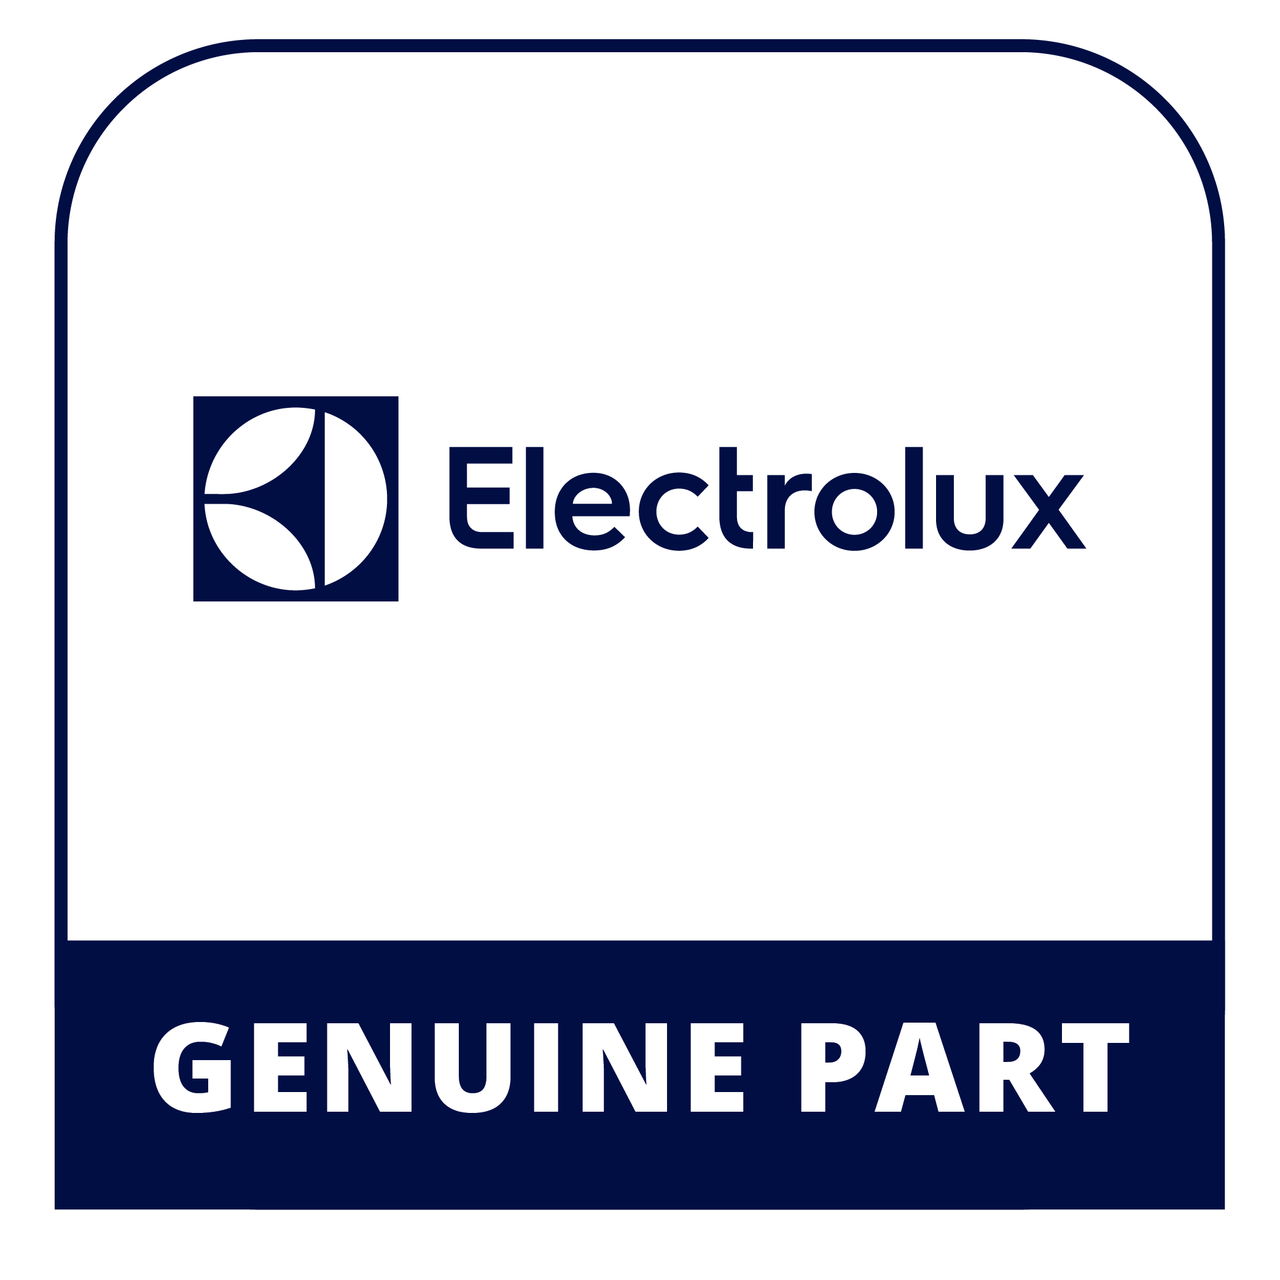 Frigidaire - Electrolux 318262810 Bracket - Genuine Electrolux Part